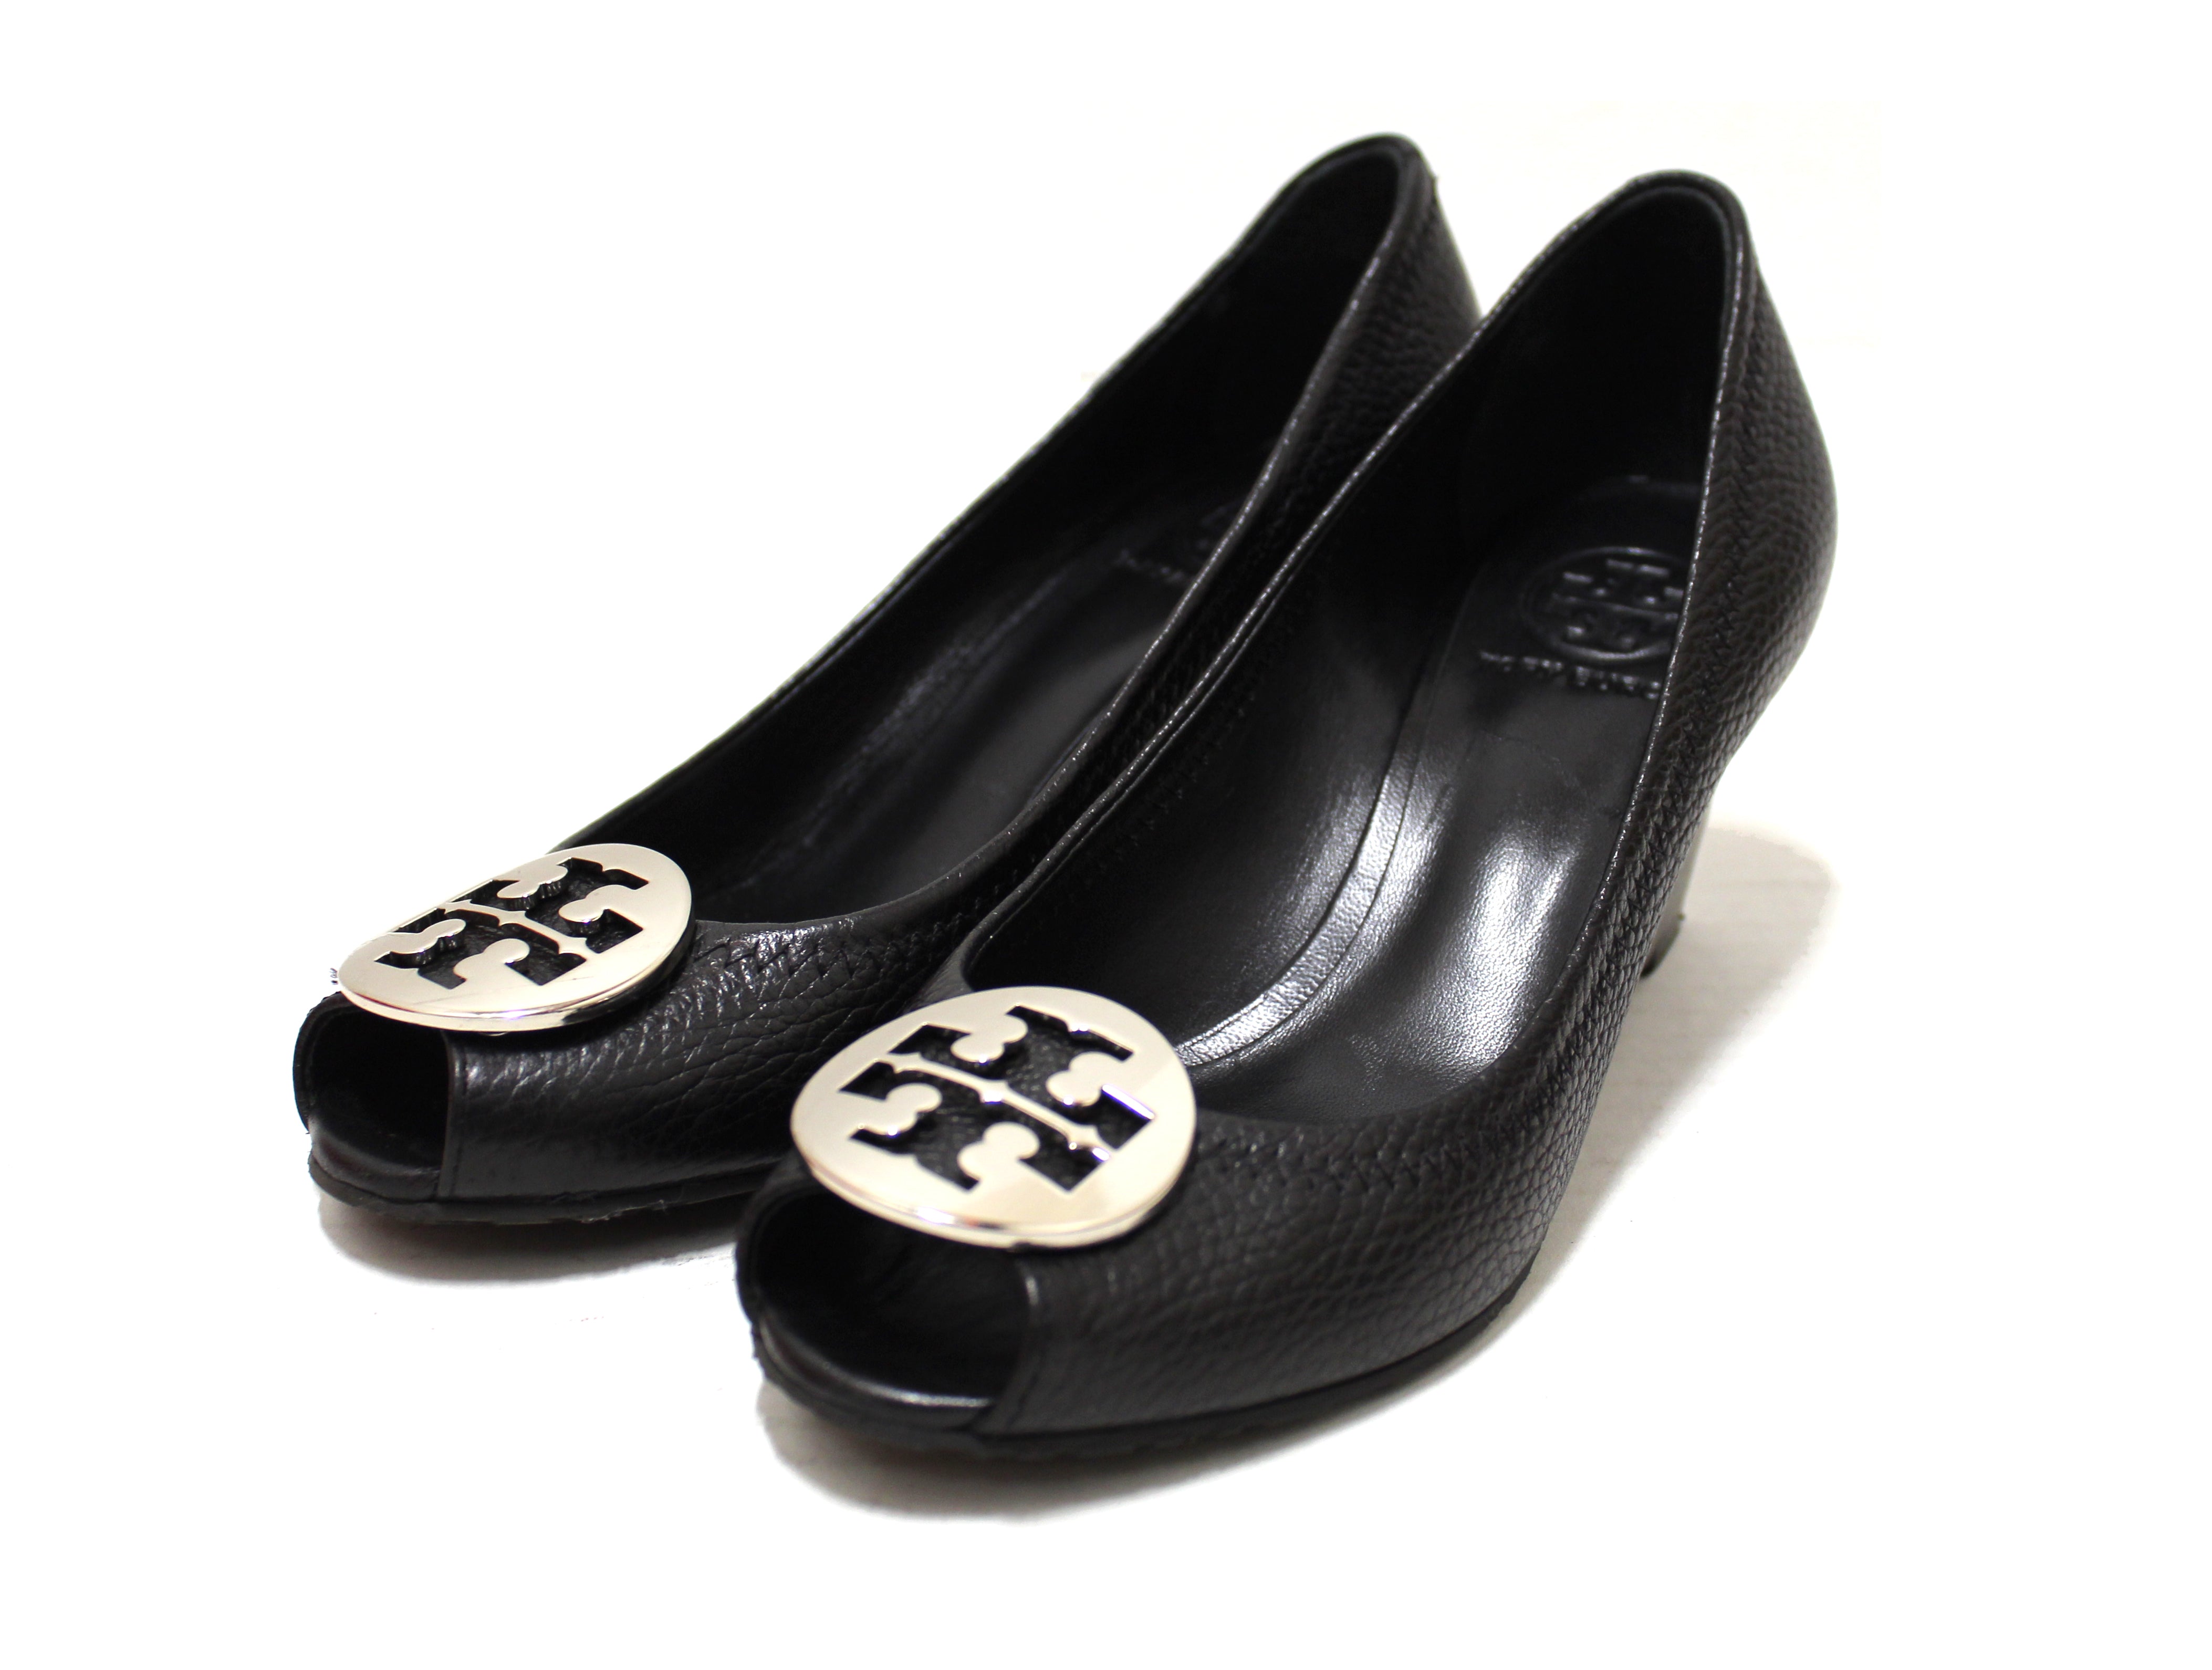 Authentic Tory Burch Sally 2 Black Leather Peep Toe Wedge Heel size 7.5